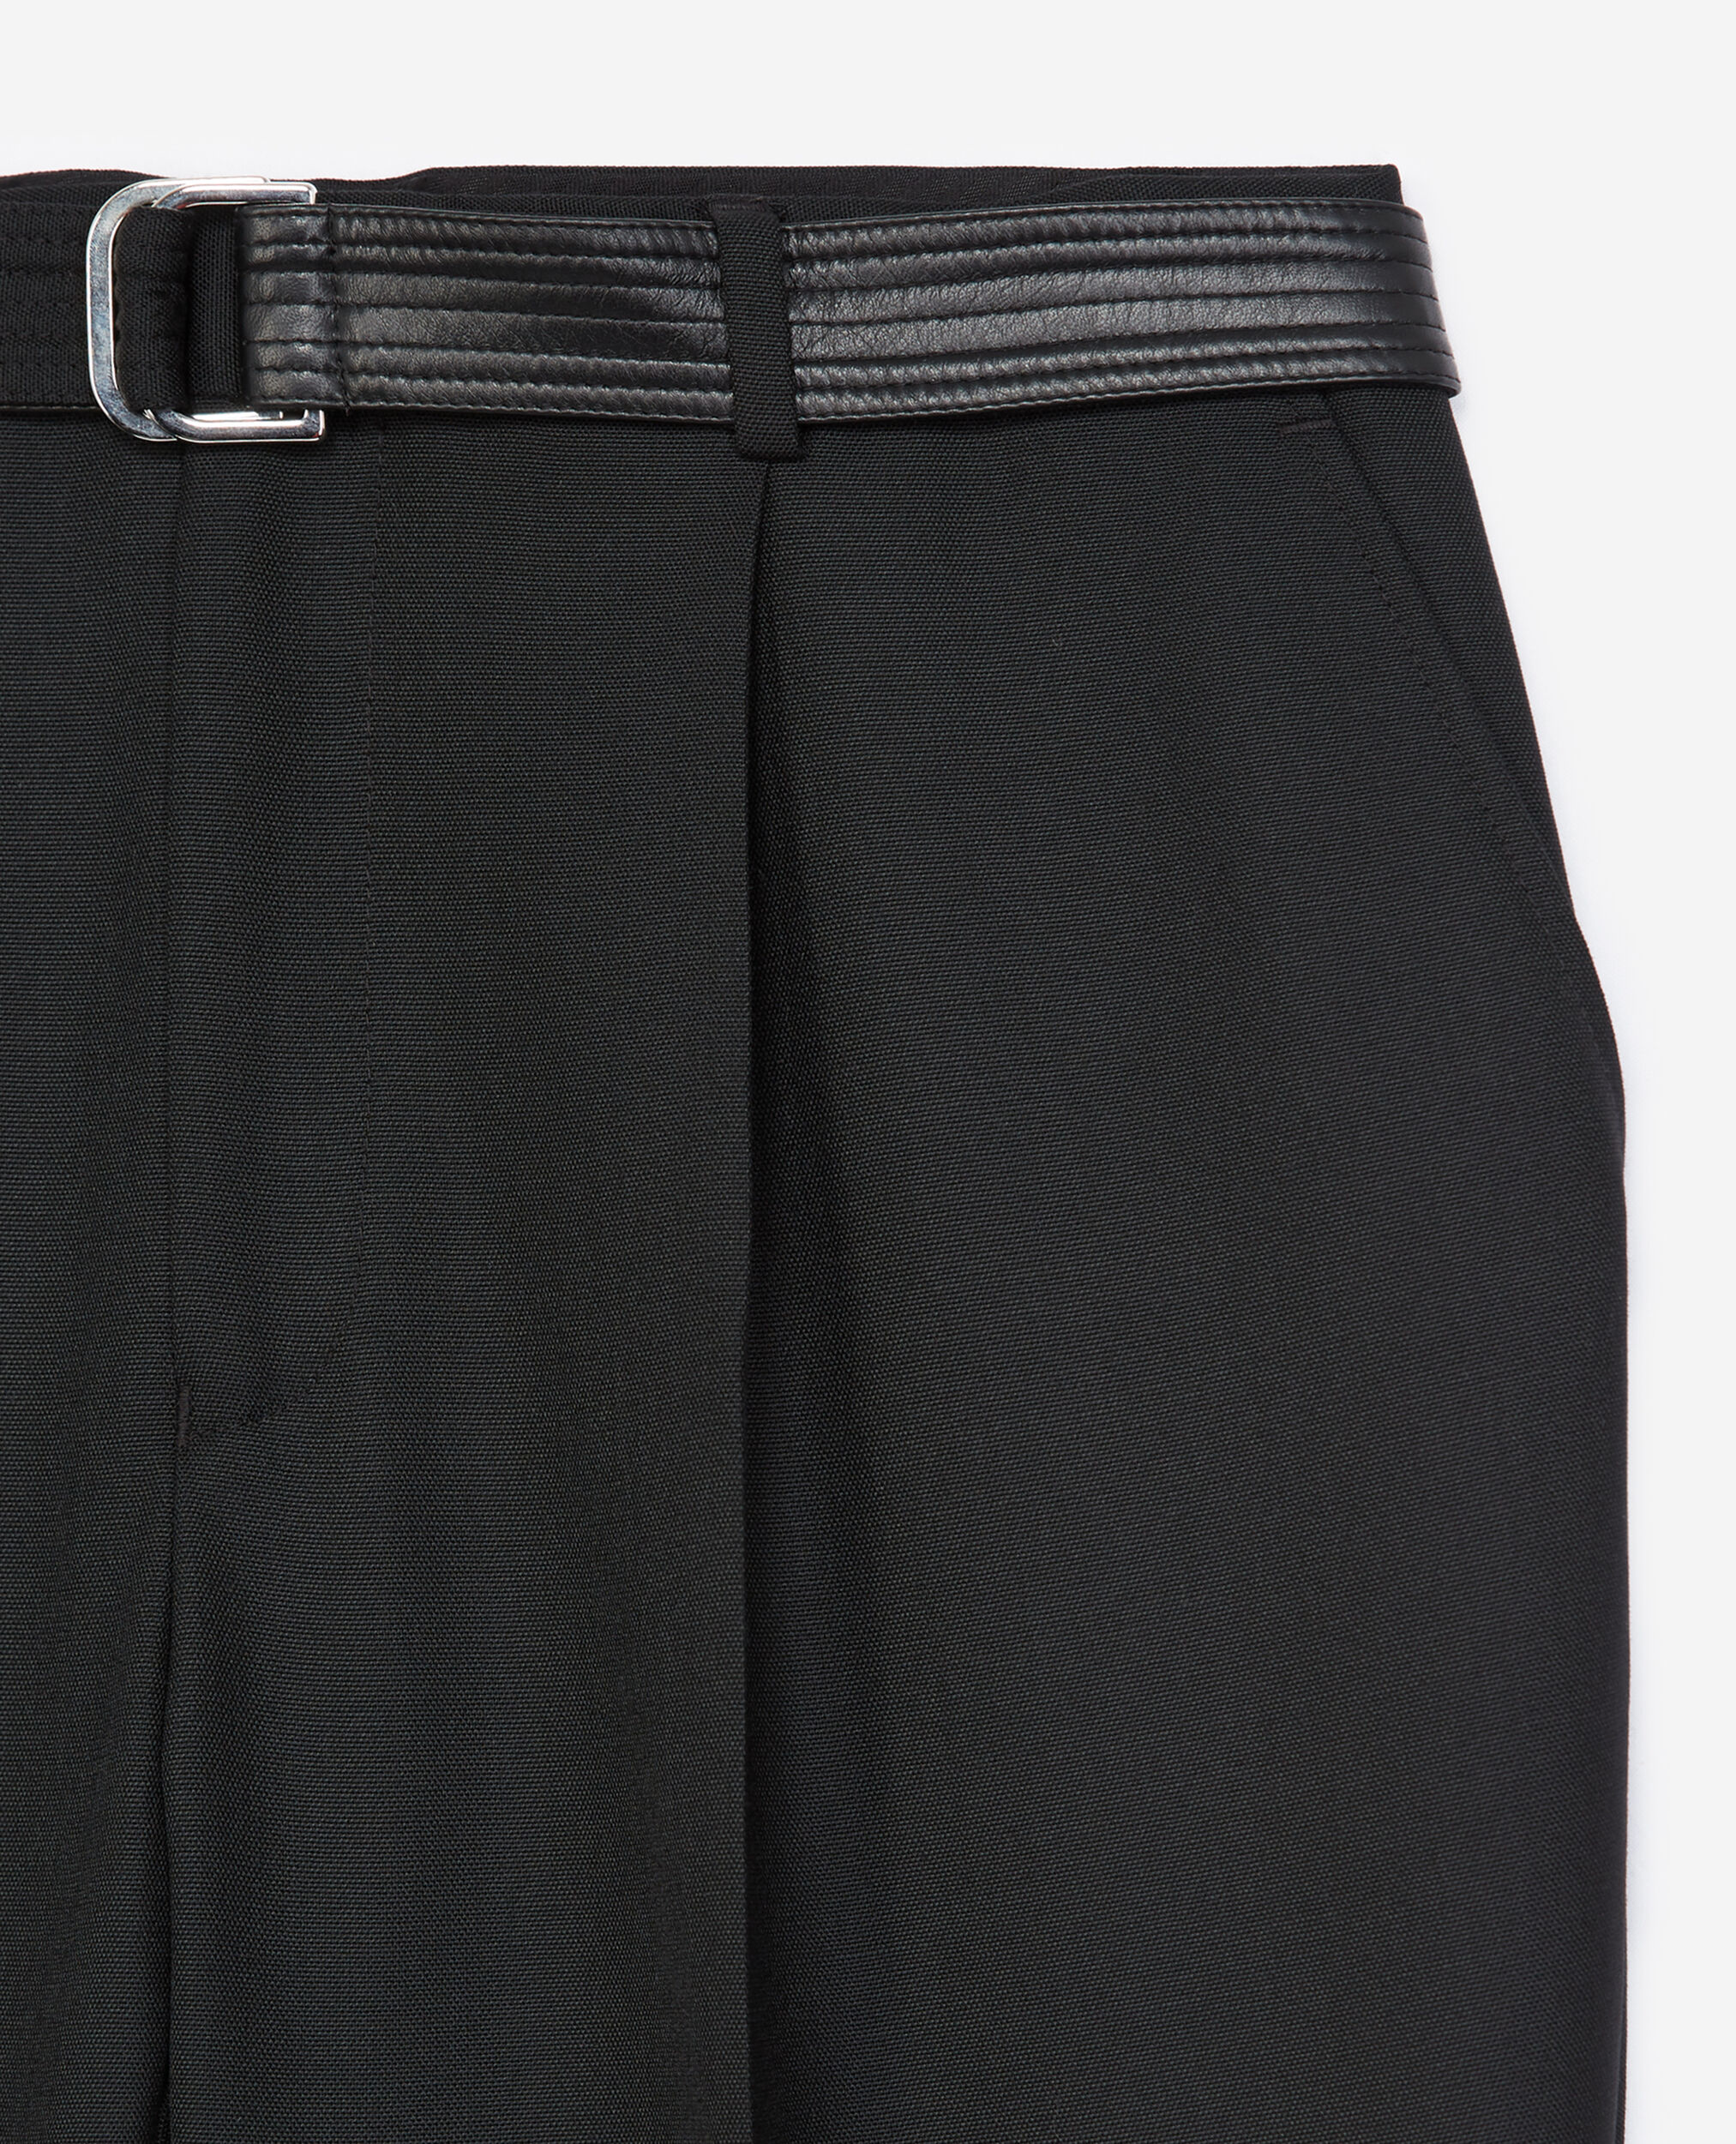 Pantalón traje lana negro cinturón, BLACK, hi-res image number null